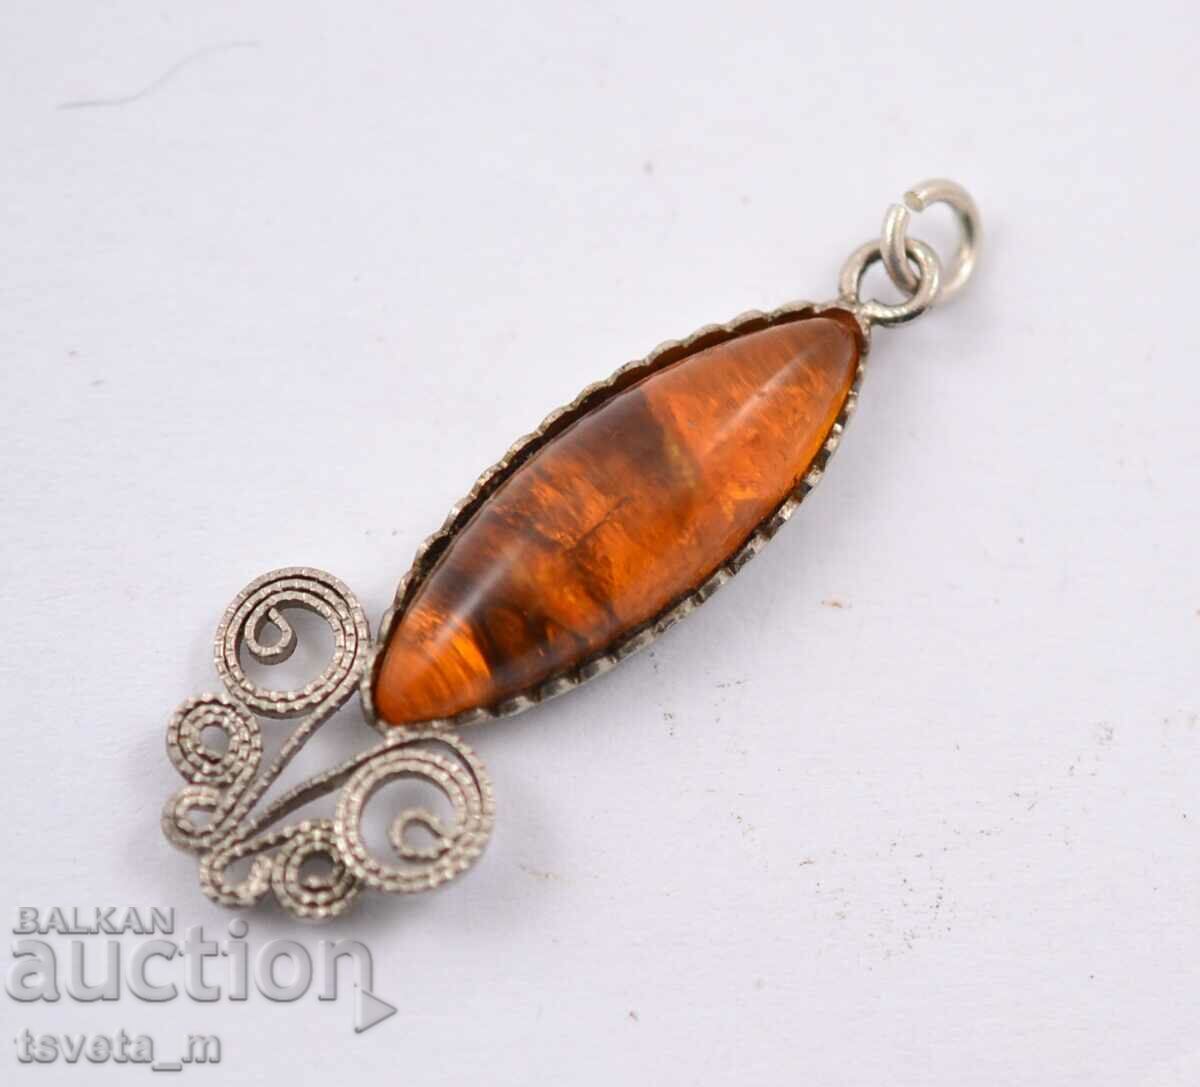 Locket, pendant with amber